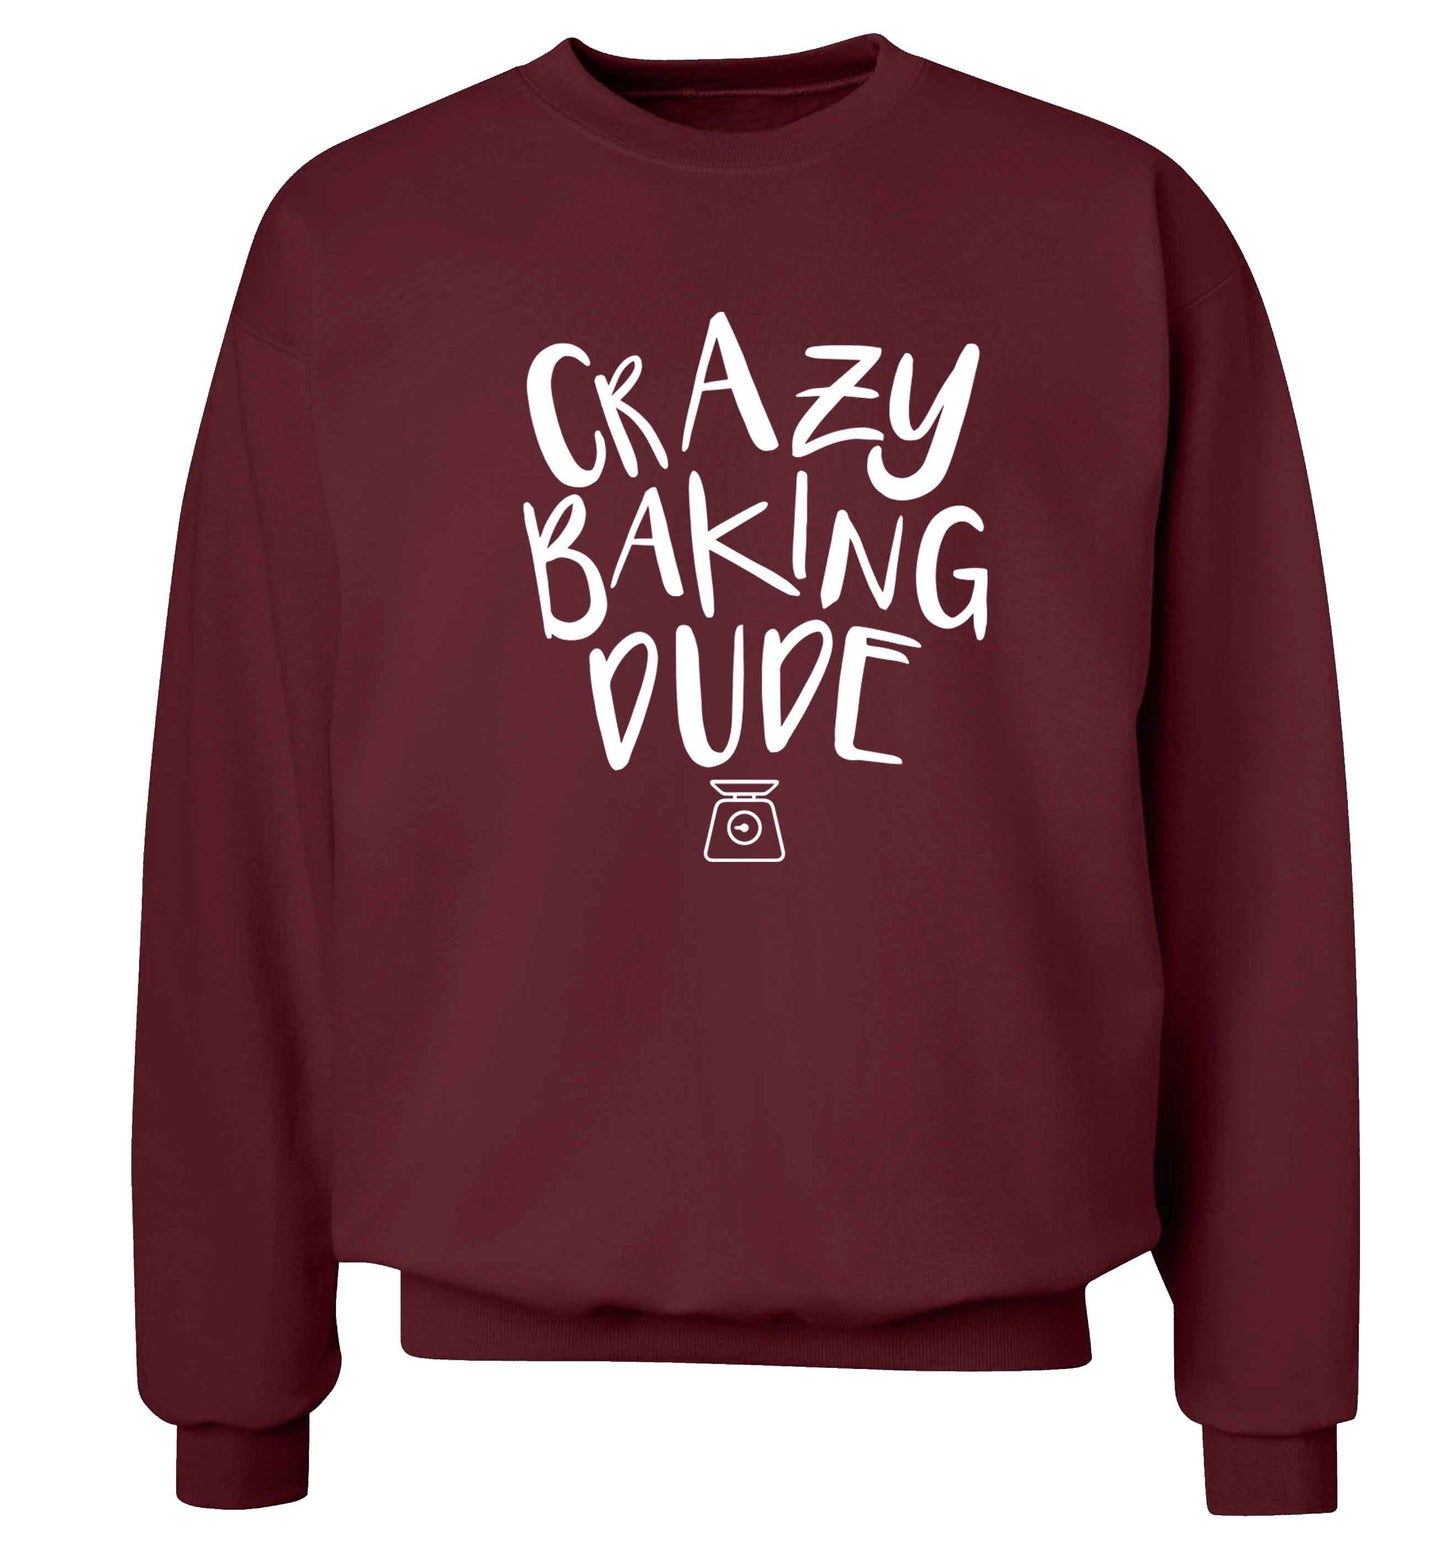 Crazy baking dude Adult's unisex maroon Sweater 2XL